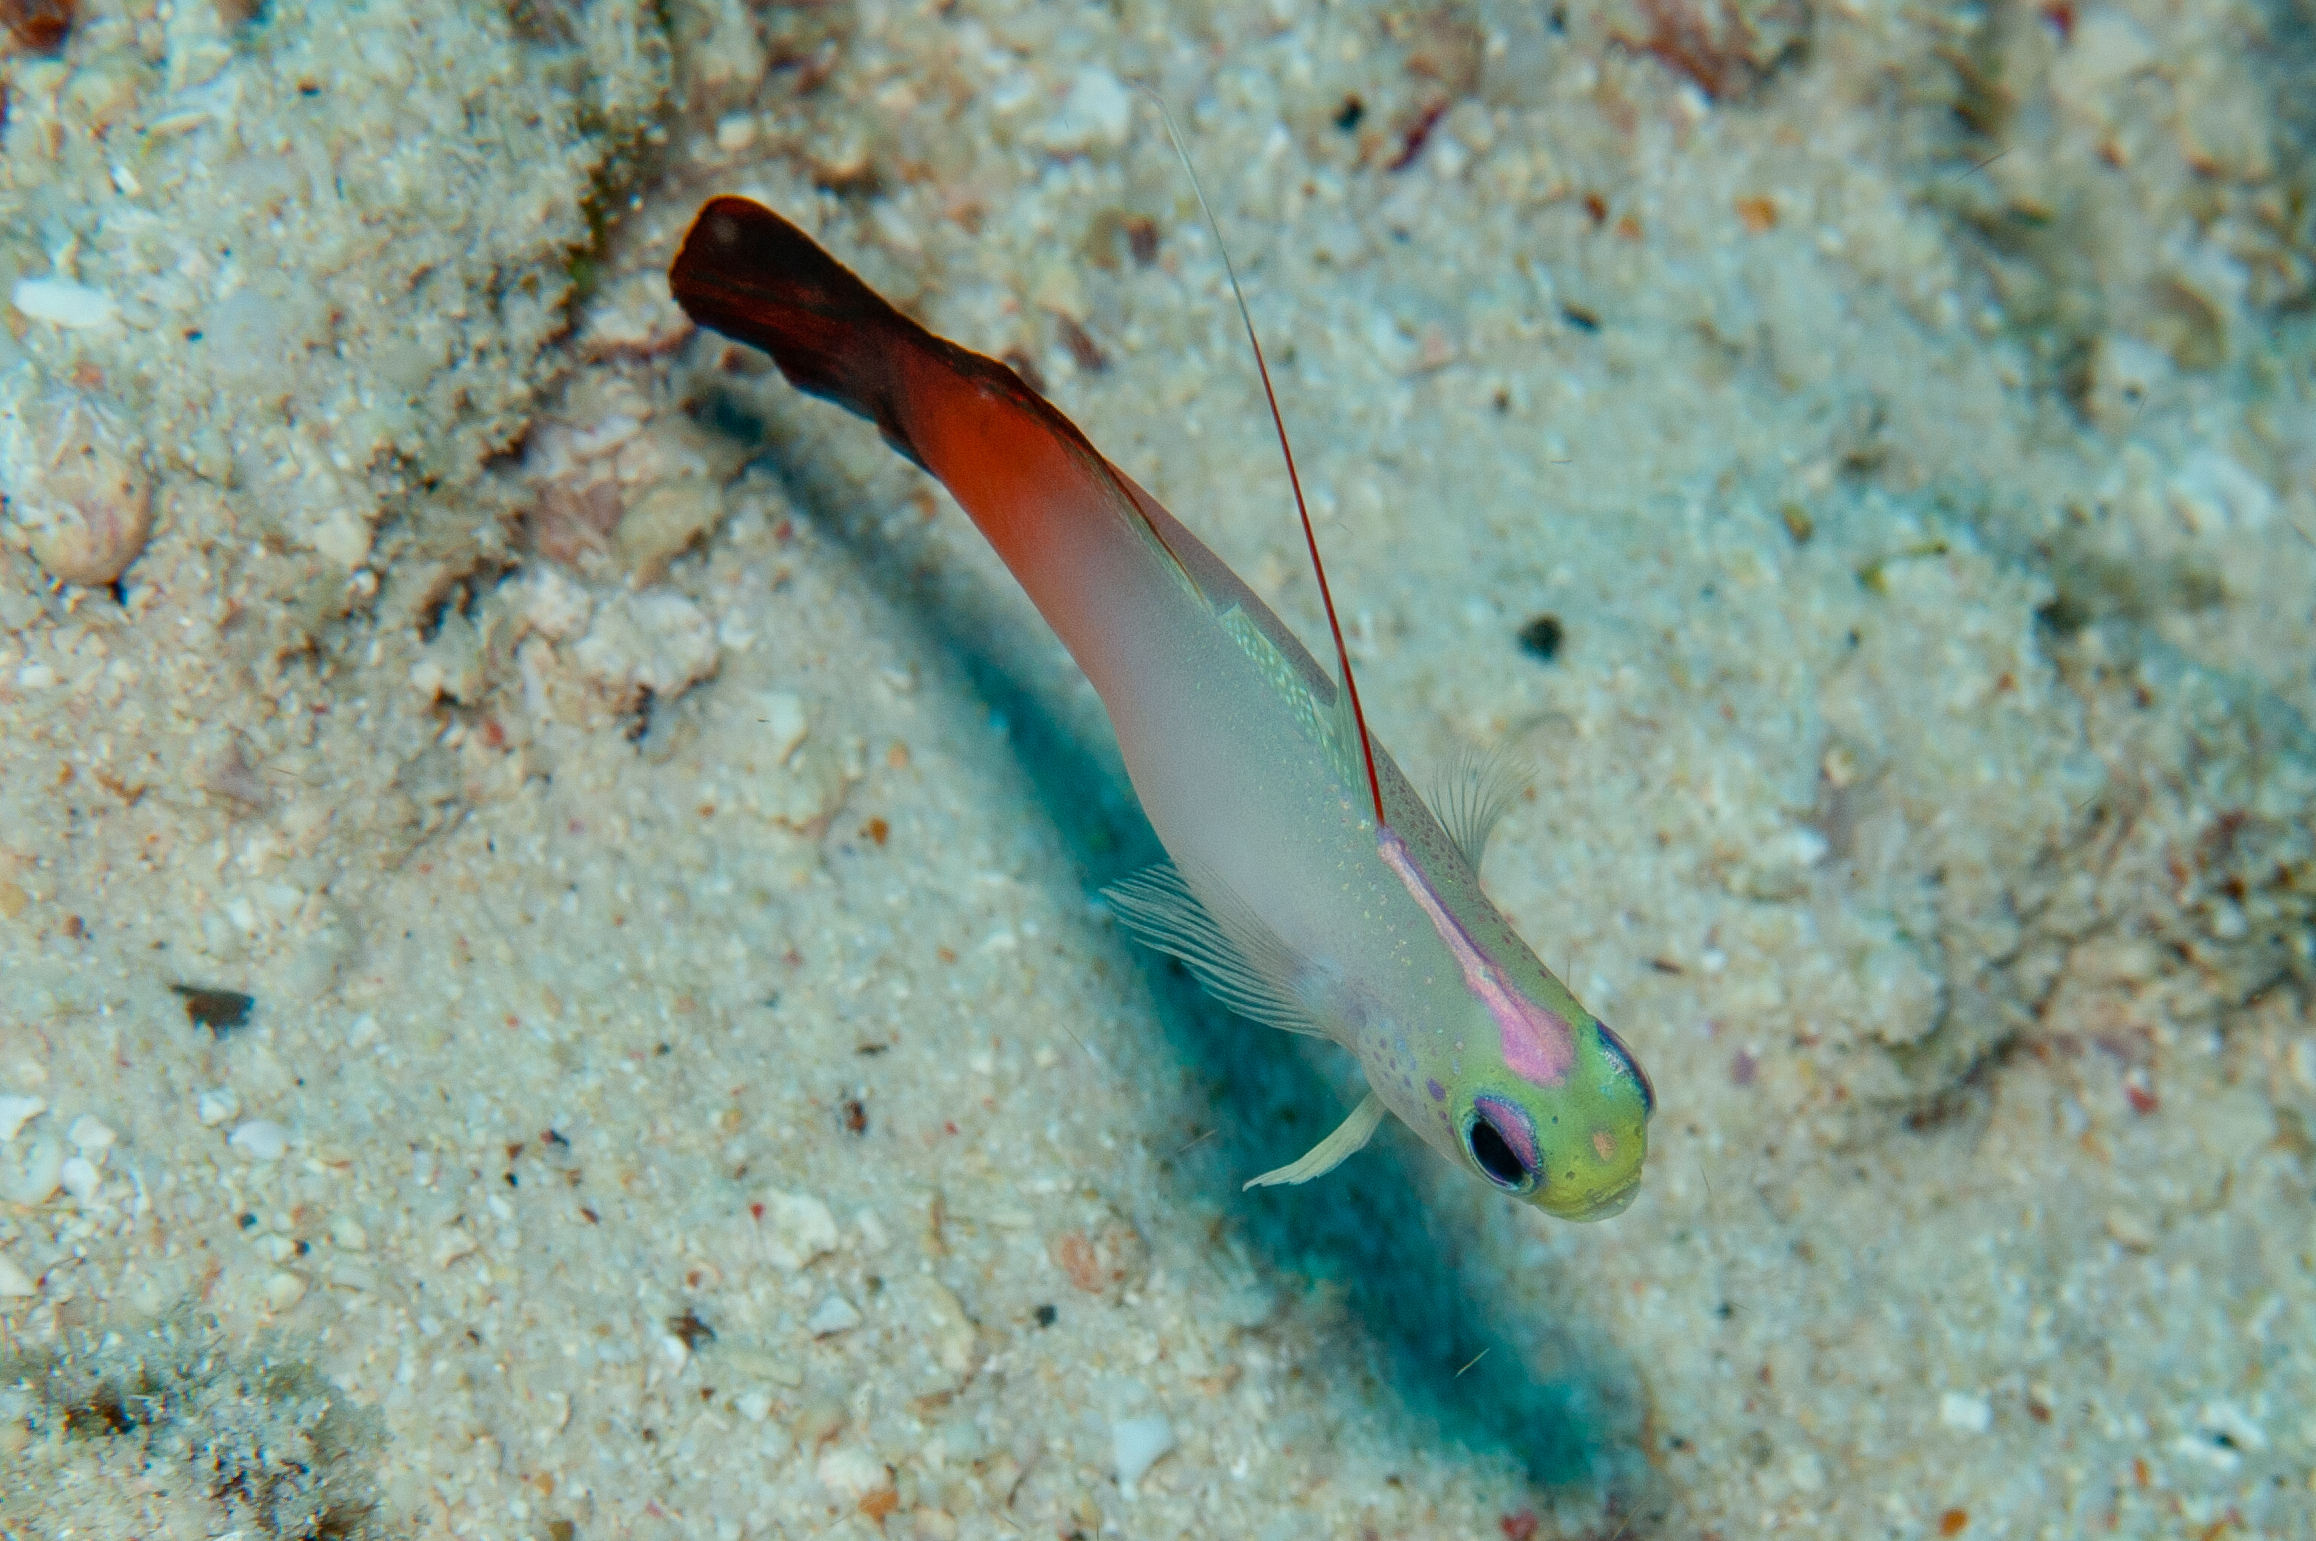 Fire dartfish - Nemateleotris magnifica, Dicky's Reef, Witu Islands